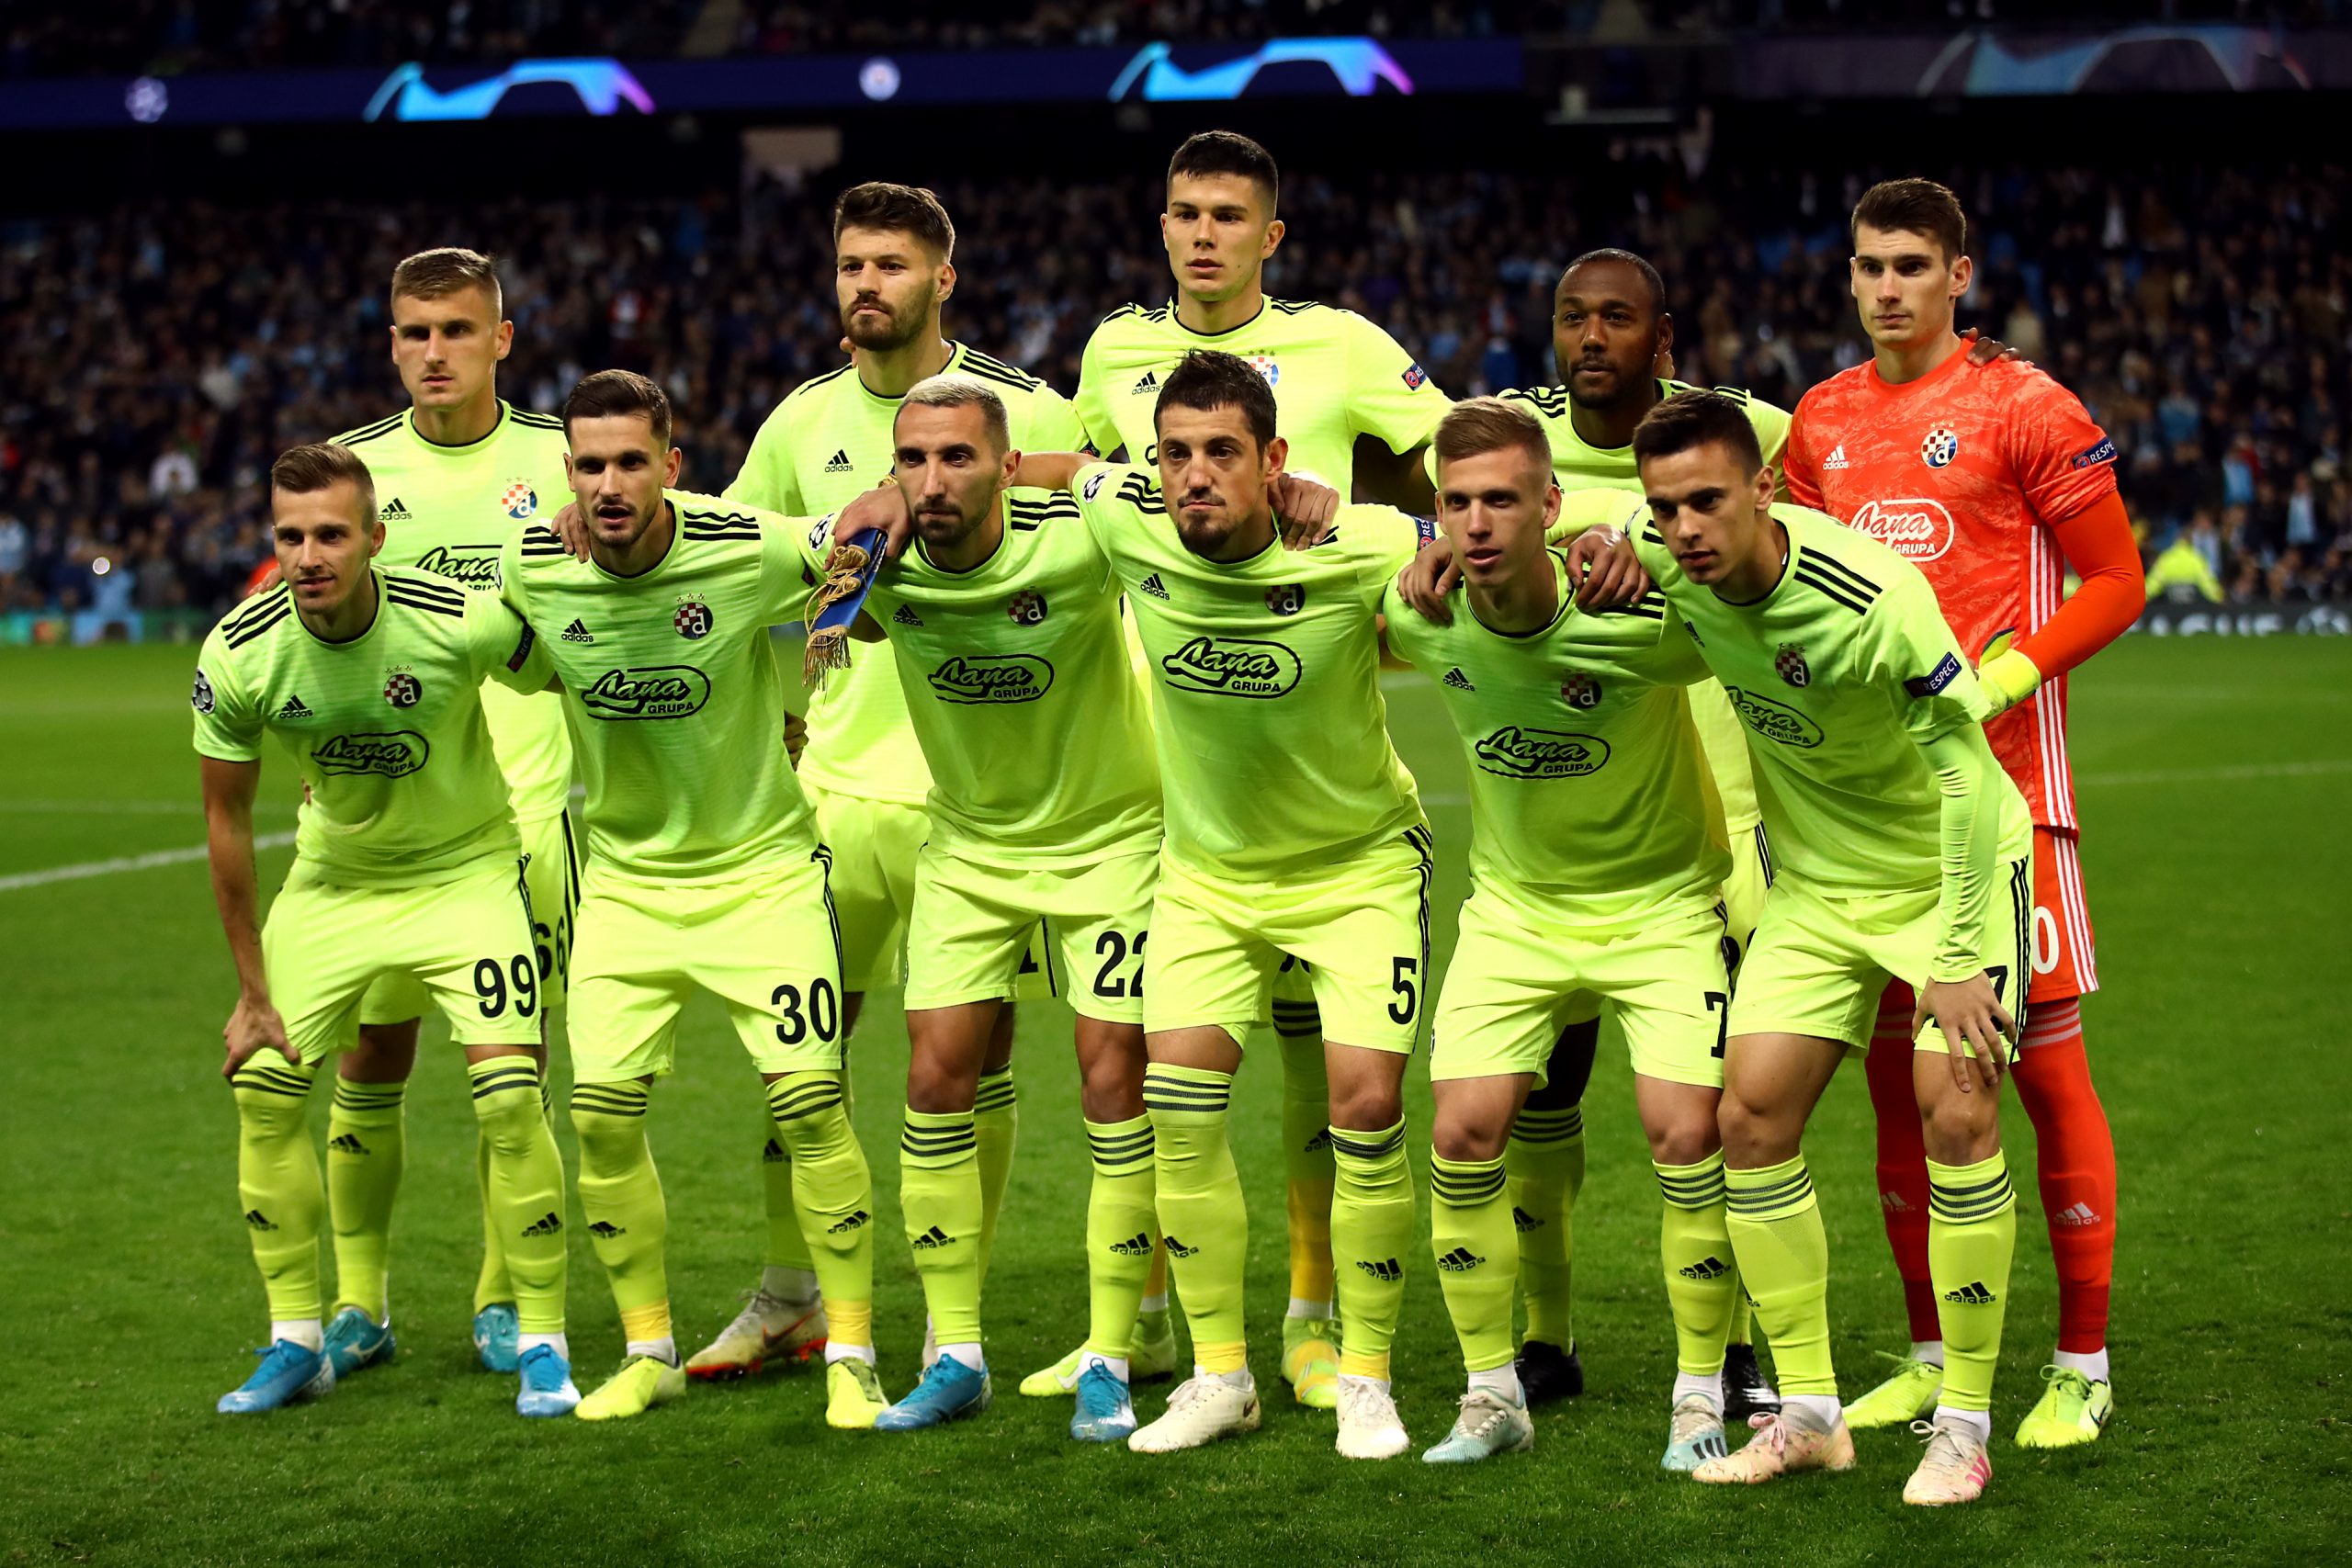 Can Dinamo Zagreb pull off a historic Champions League surprise?